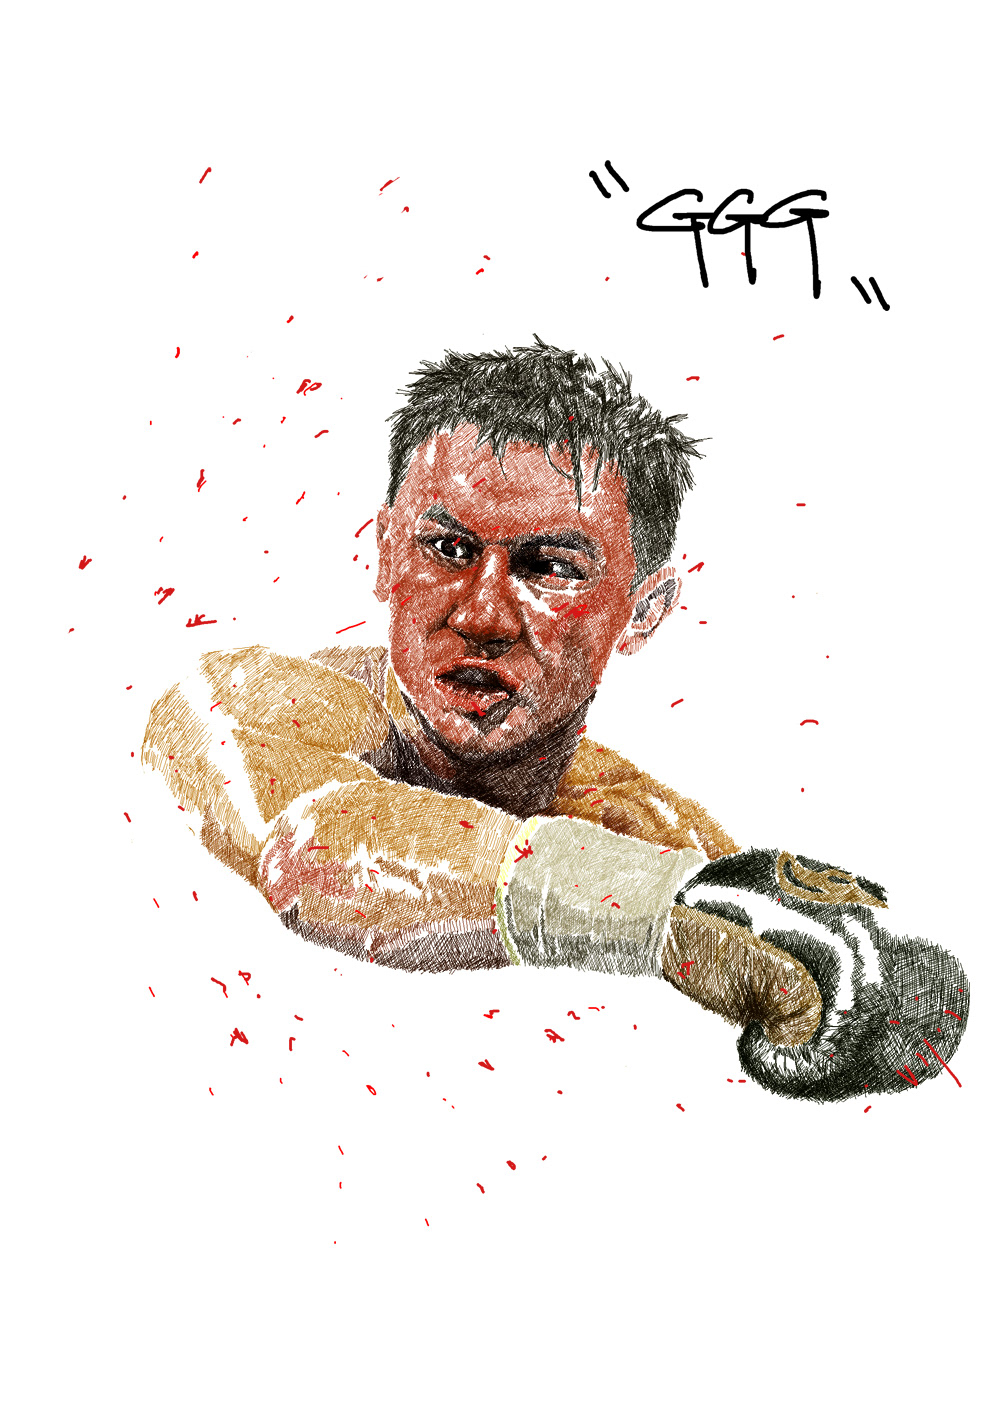 Boxing Floyd Mayweather Gennady Golovkin guillermo rigondeaux Naoya Inoue sports vasyl lomachenko Digital Art  portrait sketch